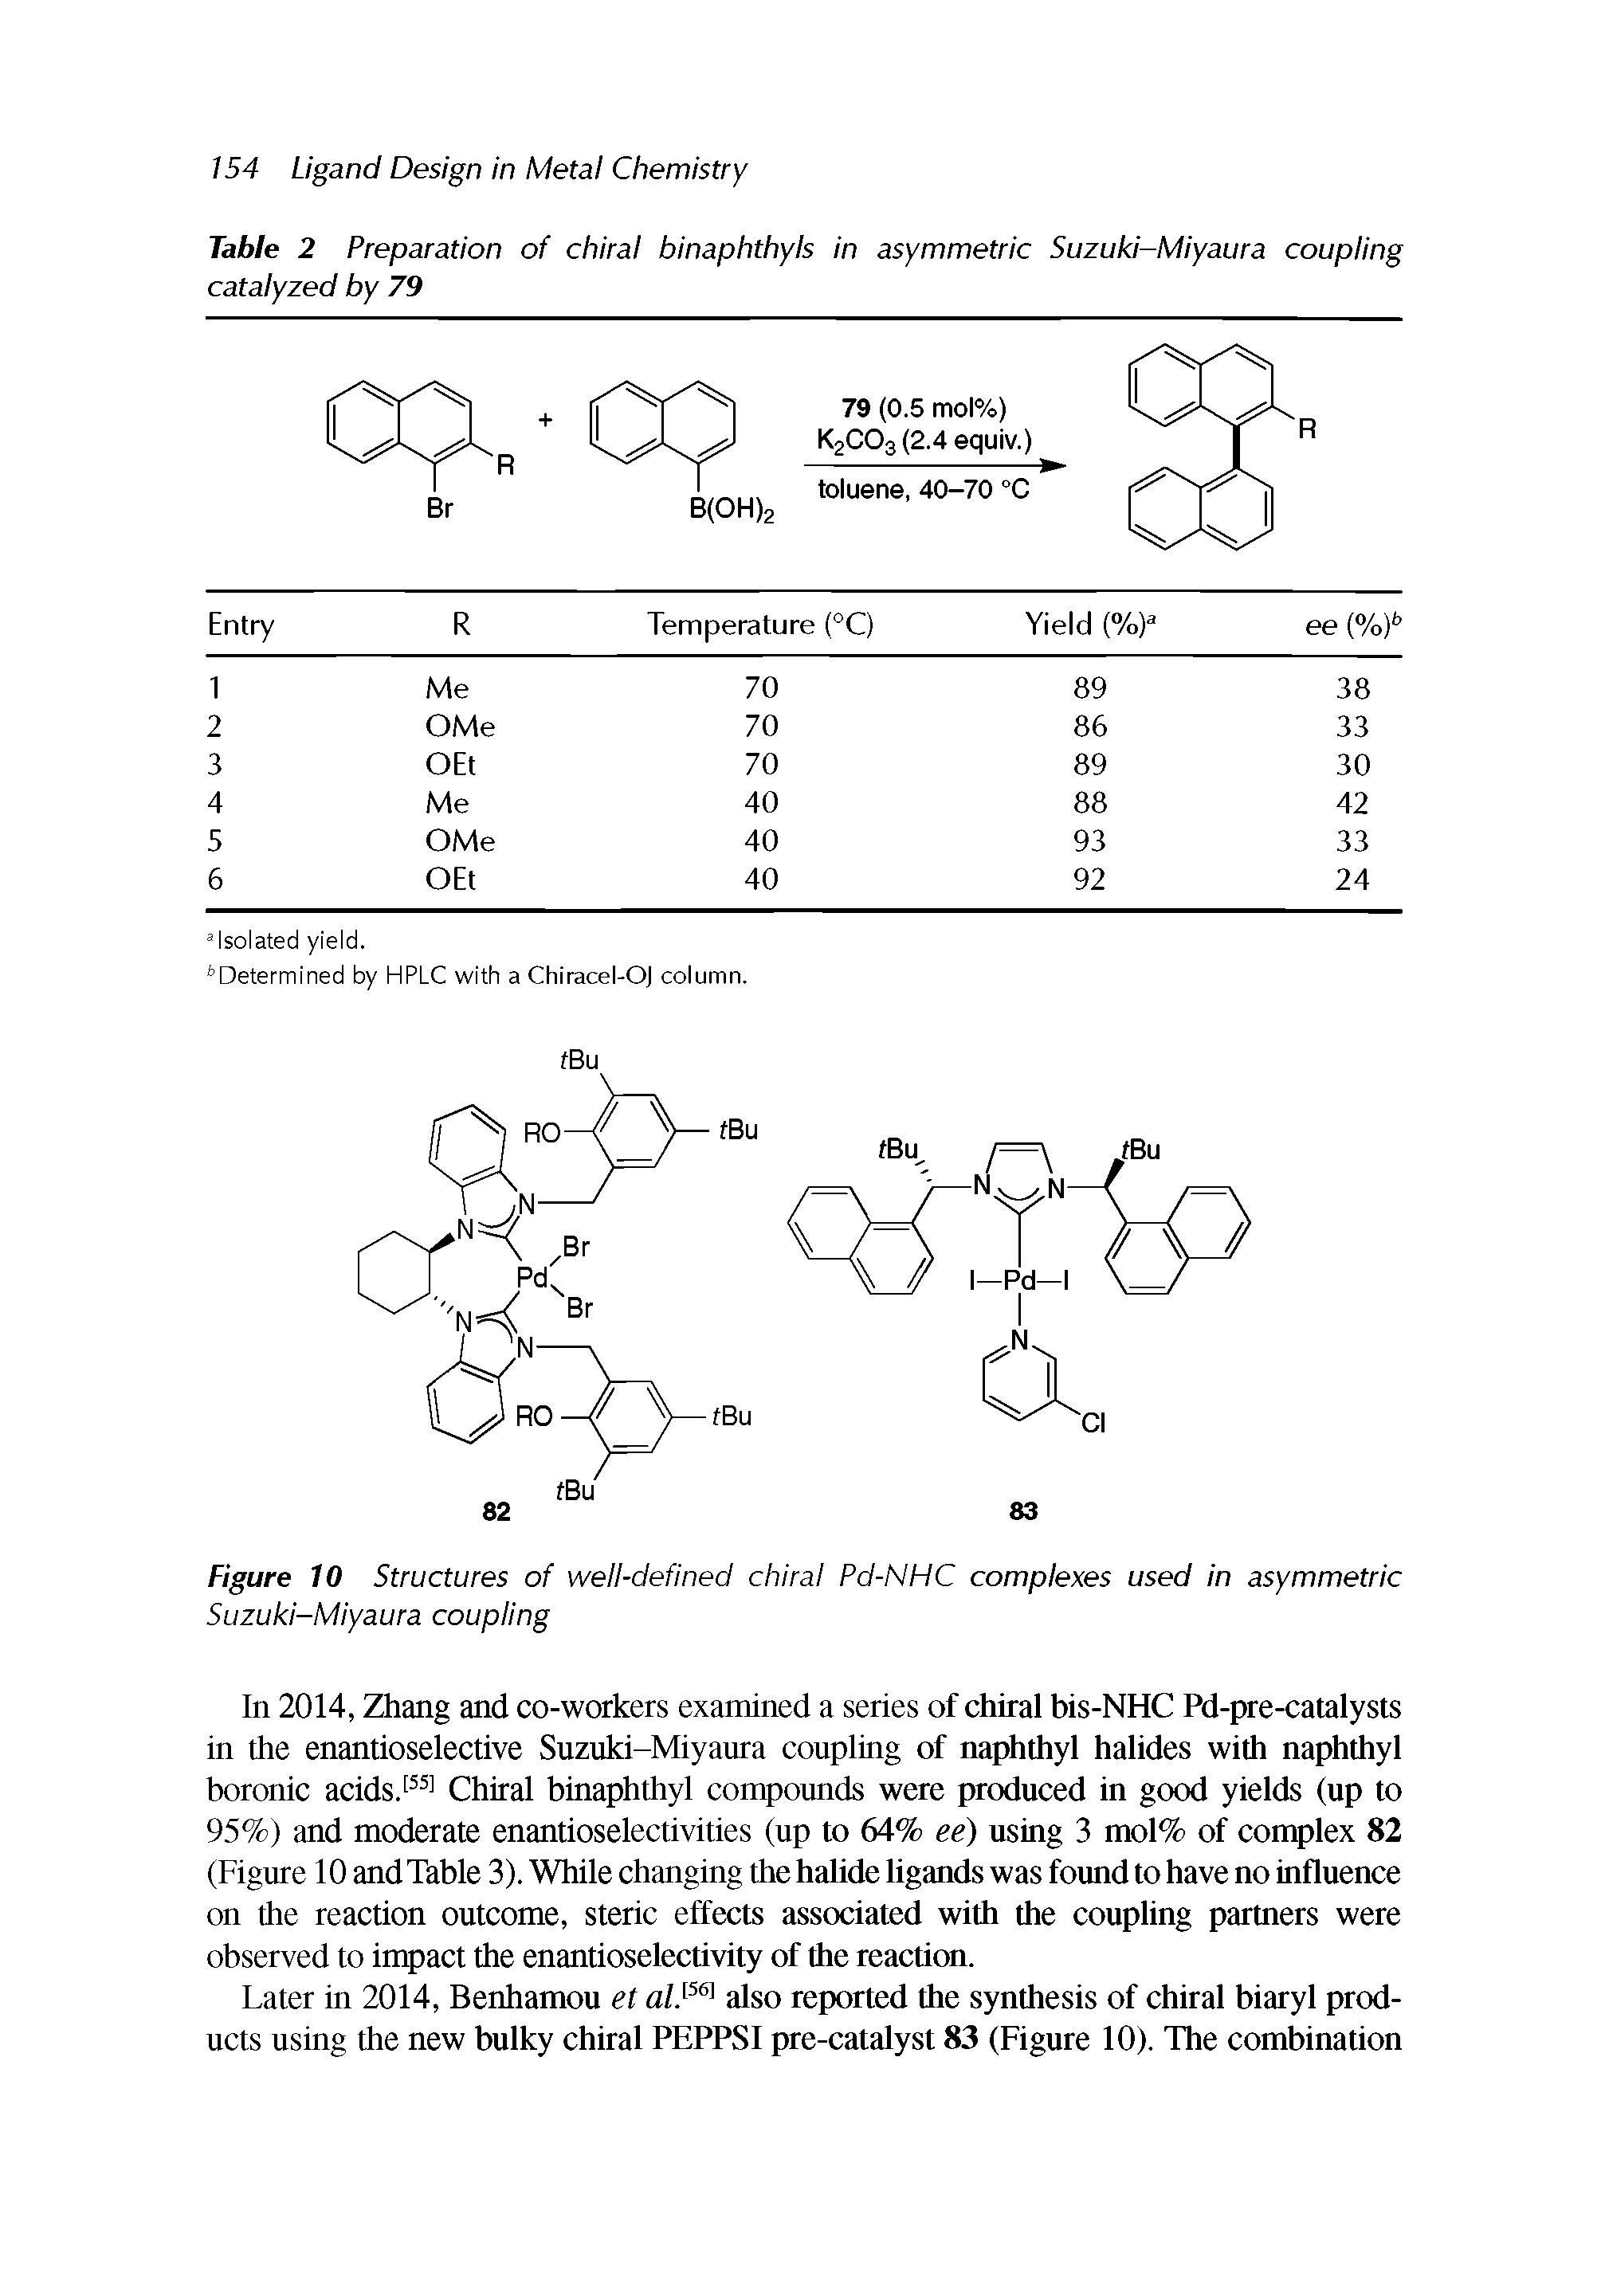 Table 2 Preparation of chiral binaphthyls in asymmetric Suzuki-Miyaura coupling catalyzed by 79...